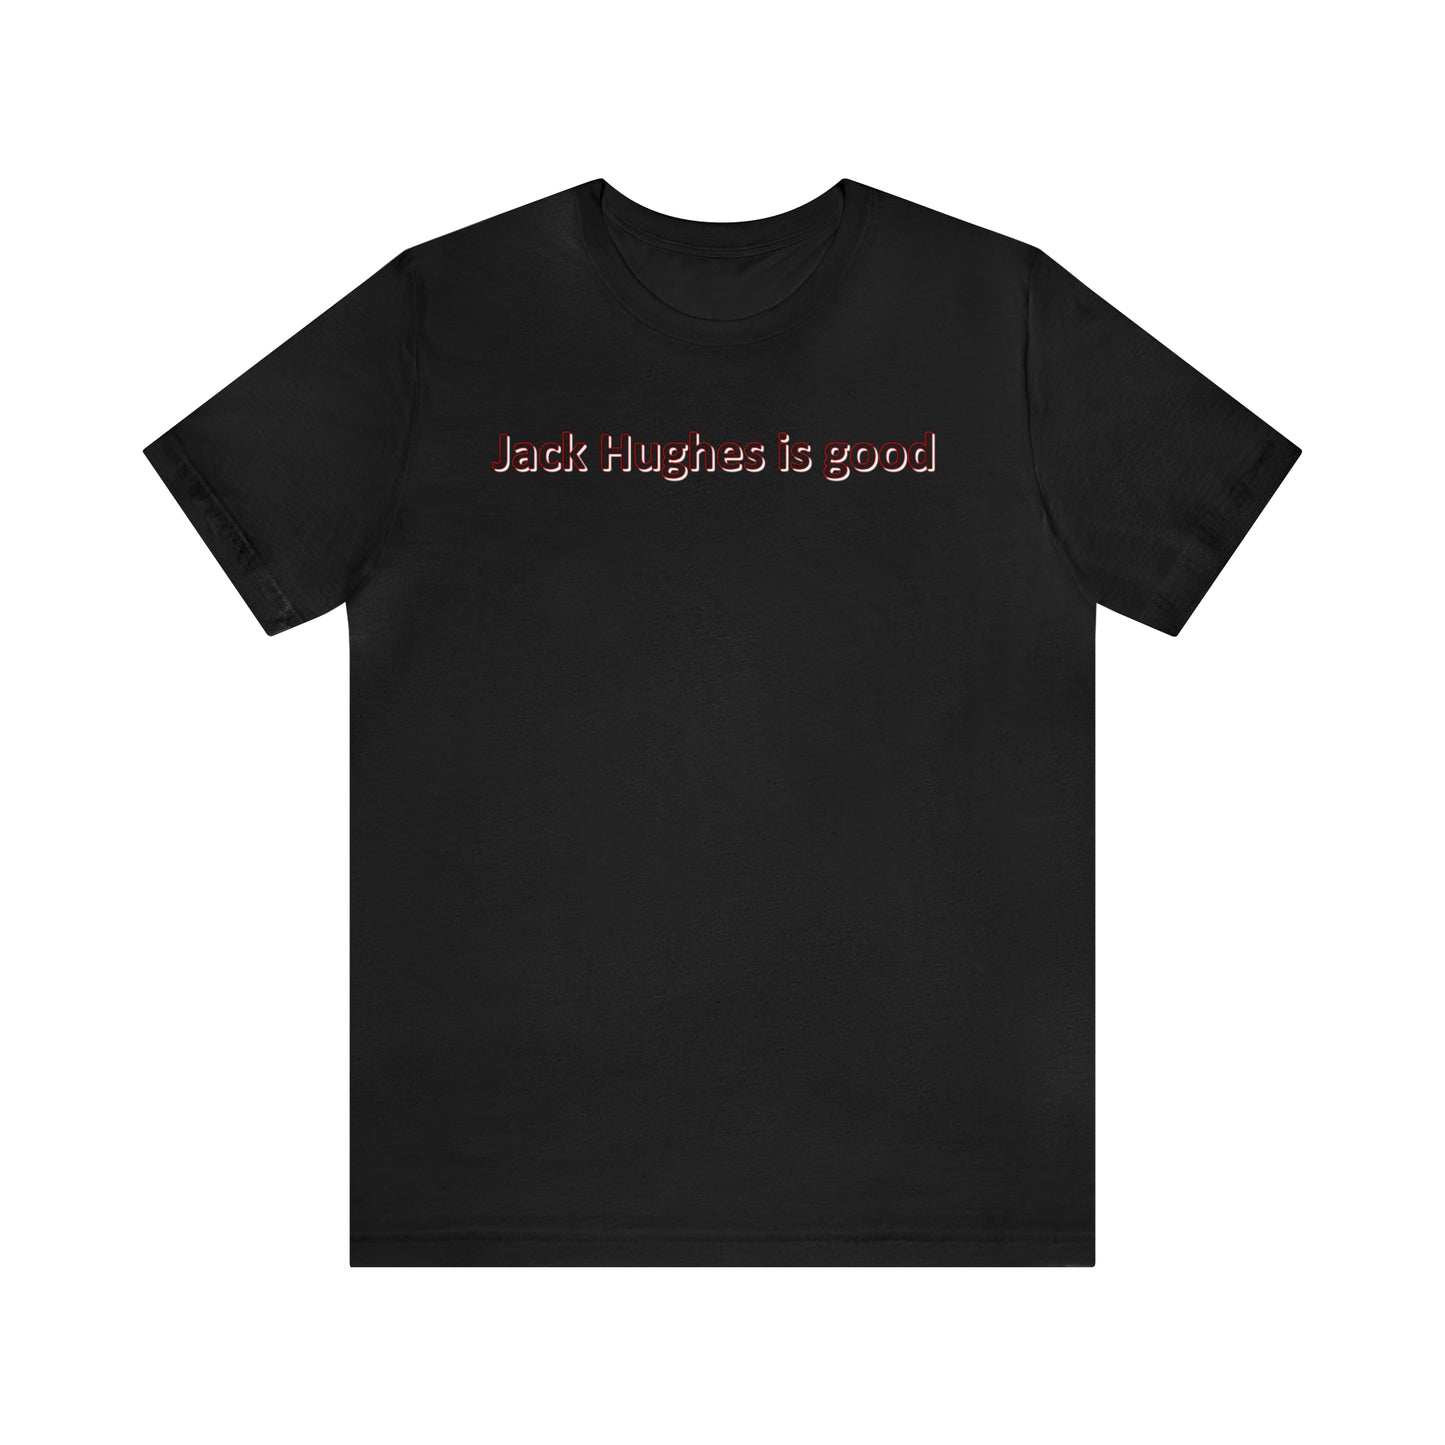 Jack Hughes is good T-shirt